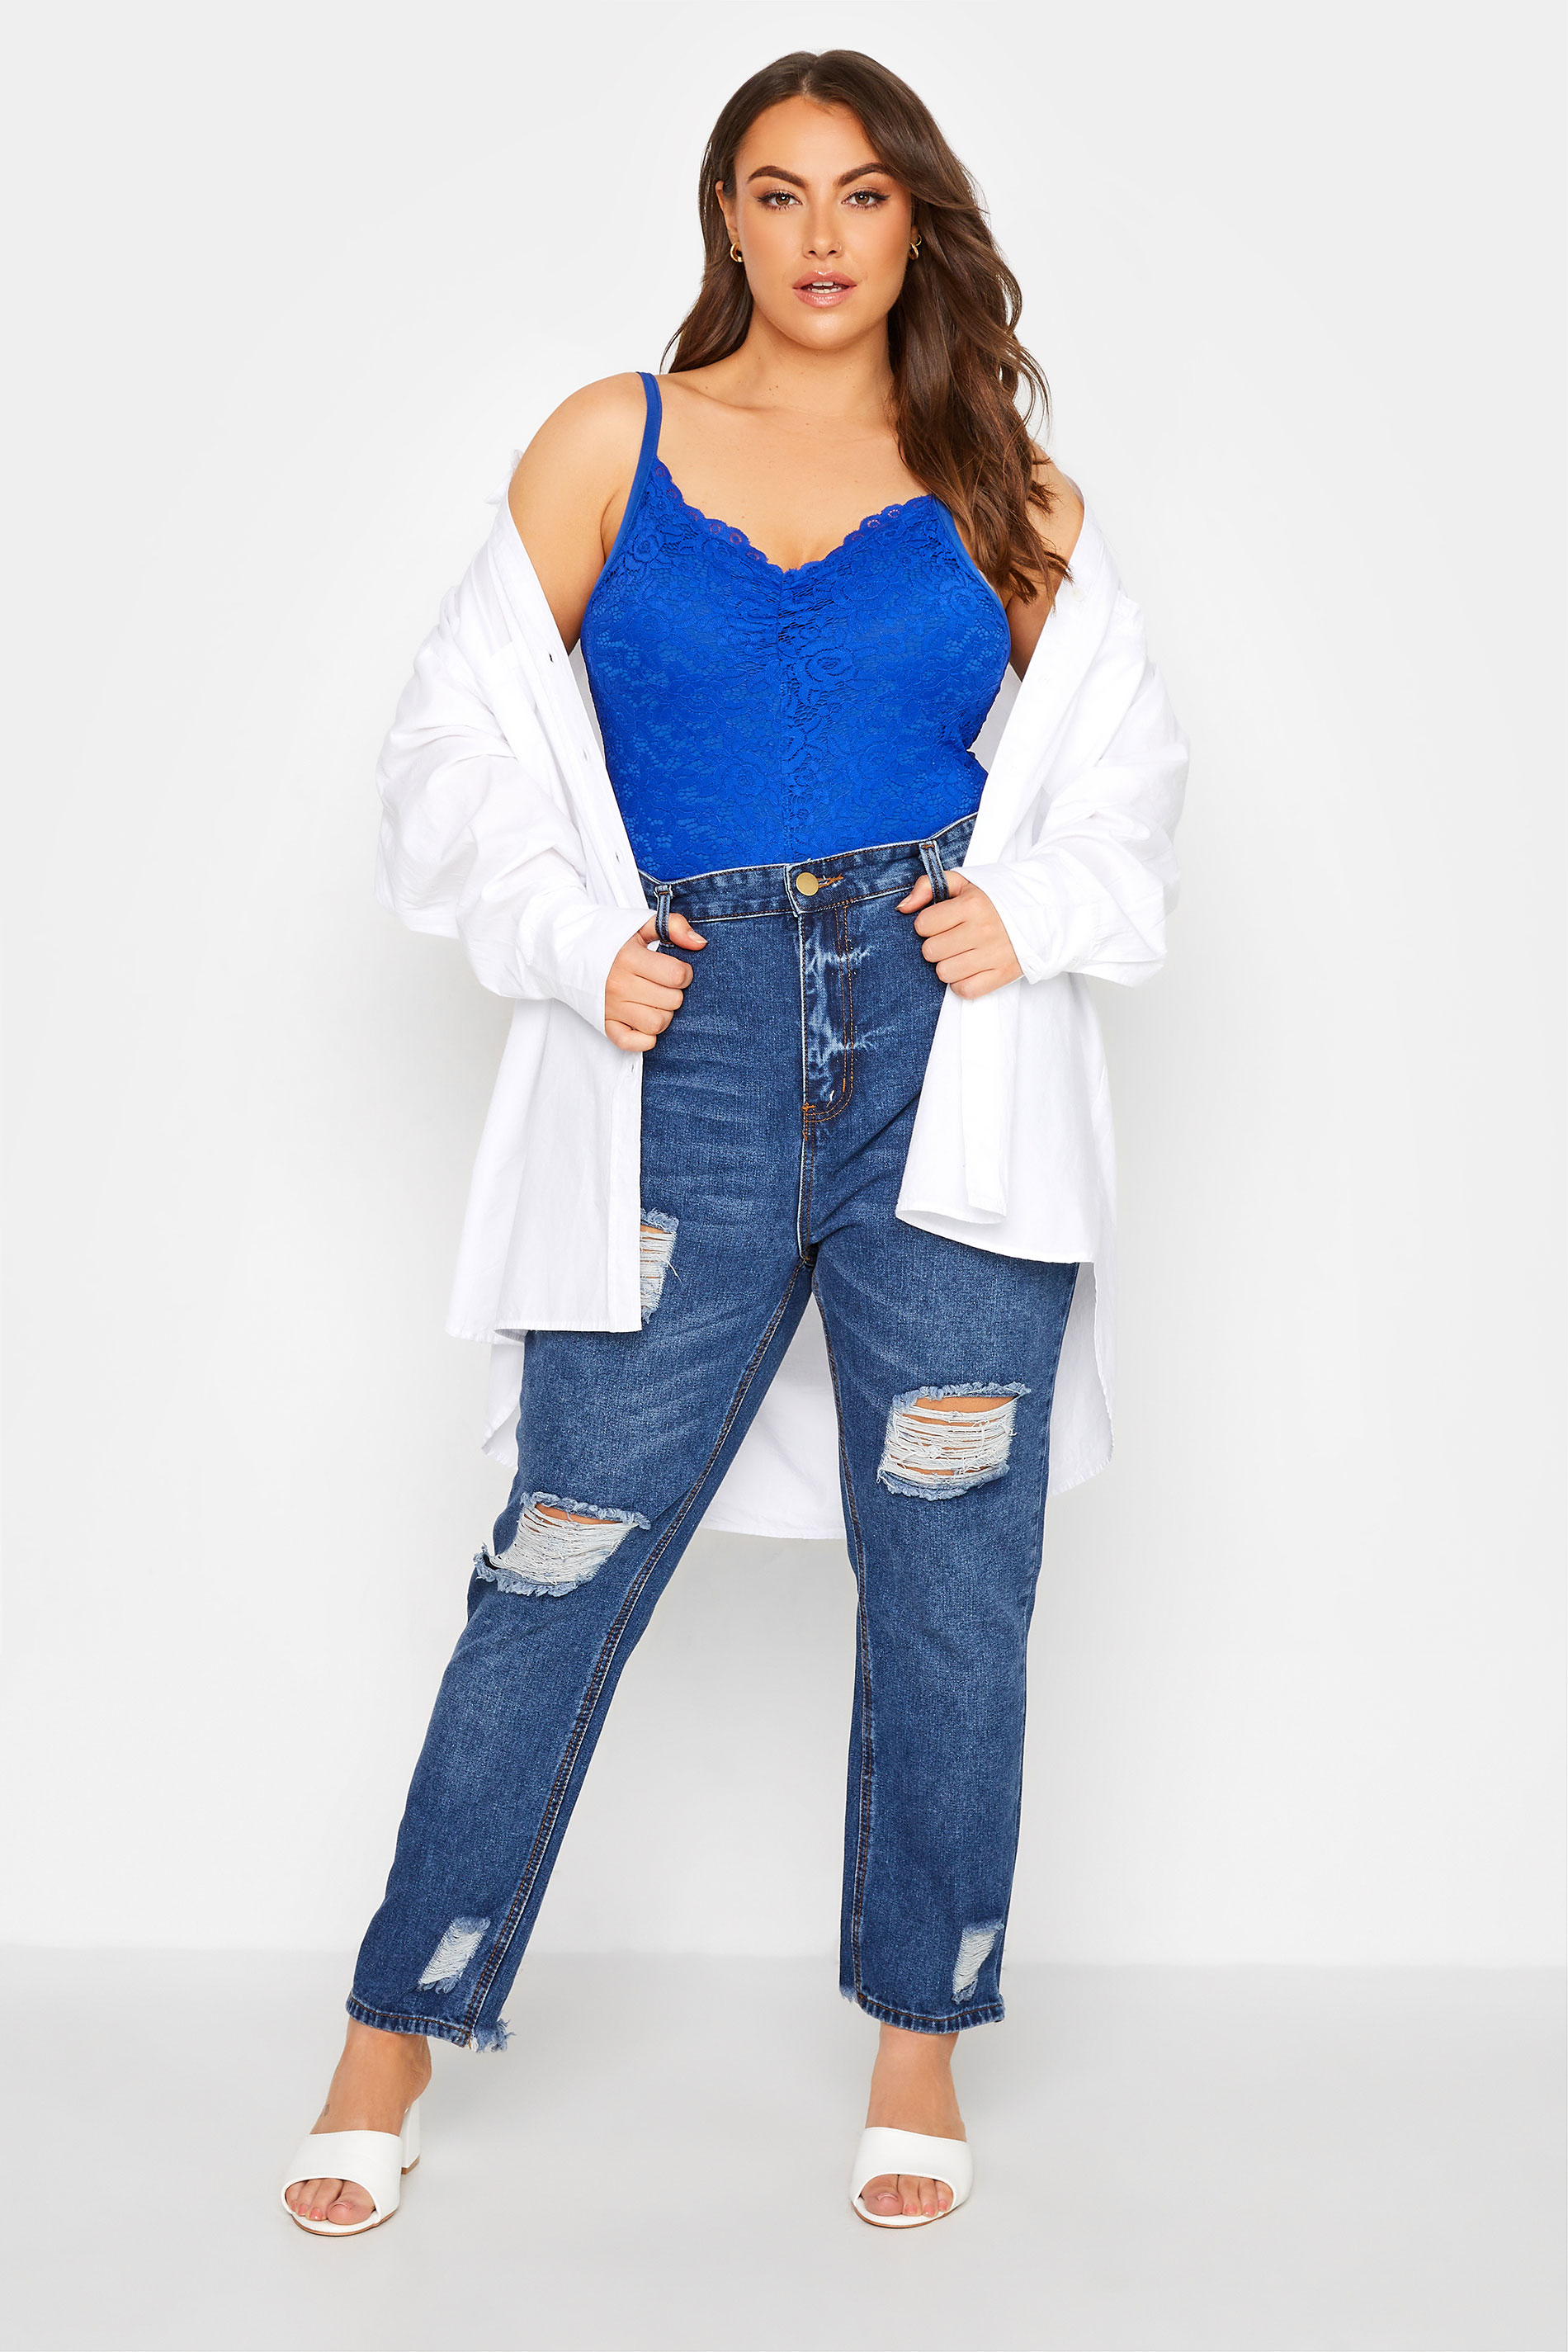 LIMITED COLLECTION Plus Size Cobalt Blue Lace Bodysuit | Yours Clothing 2